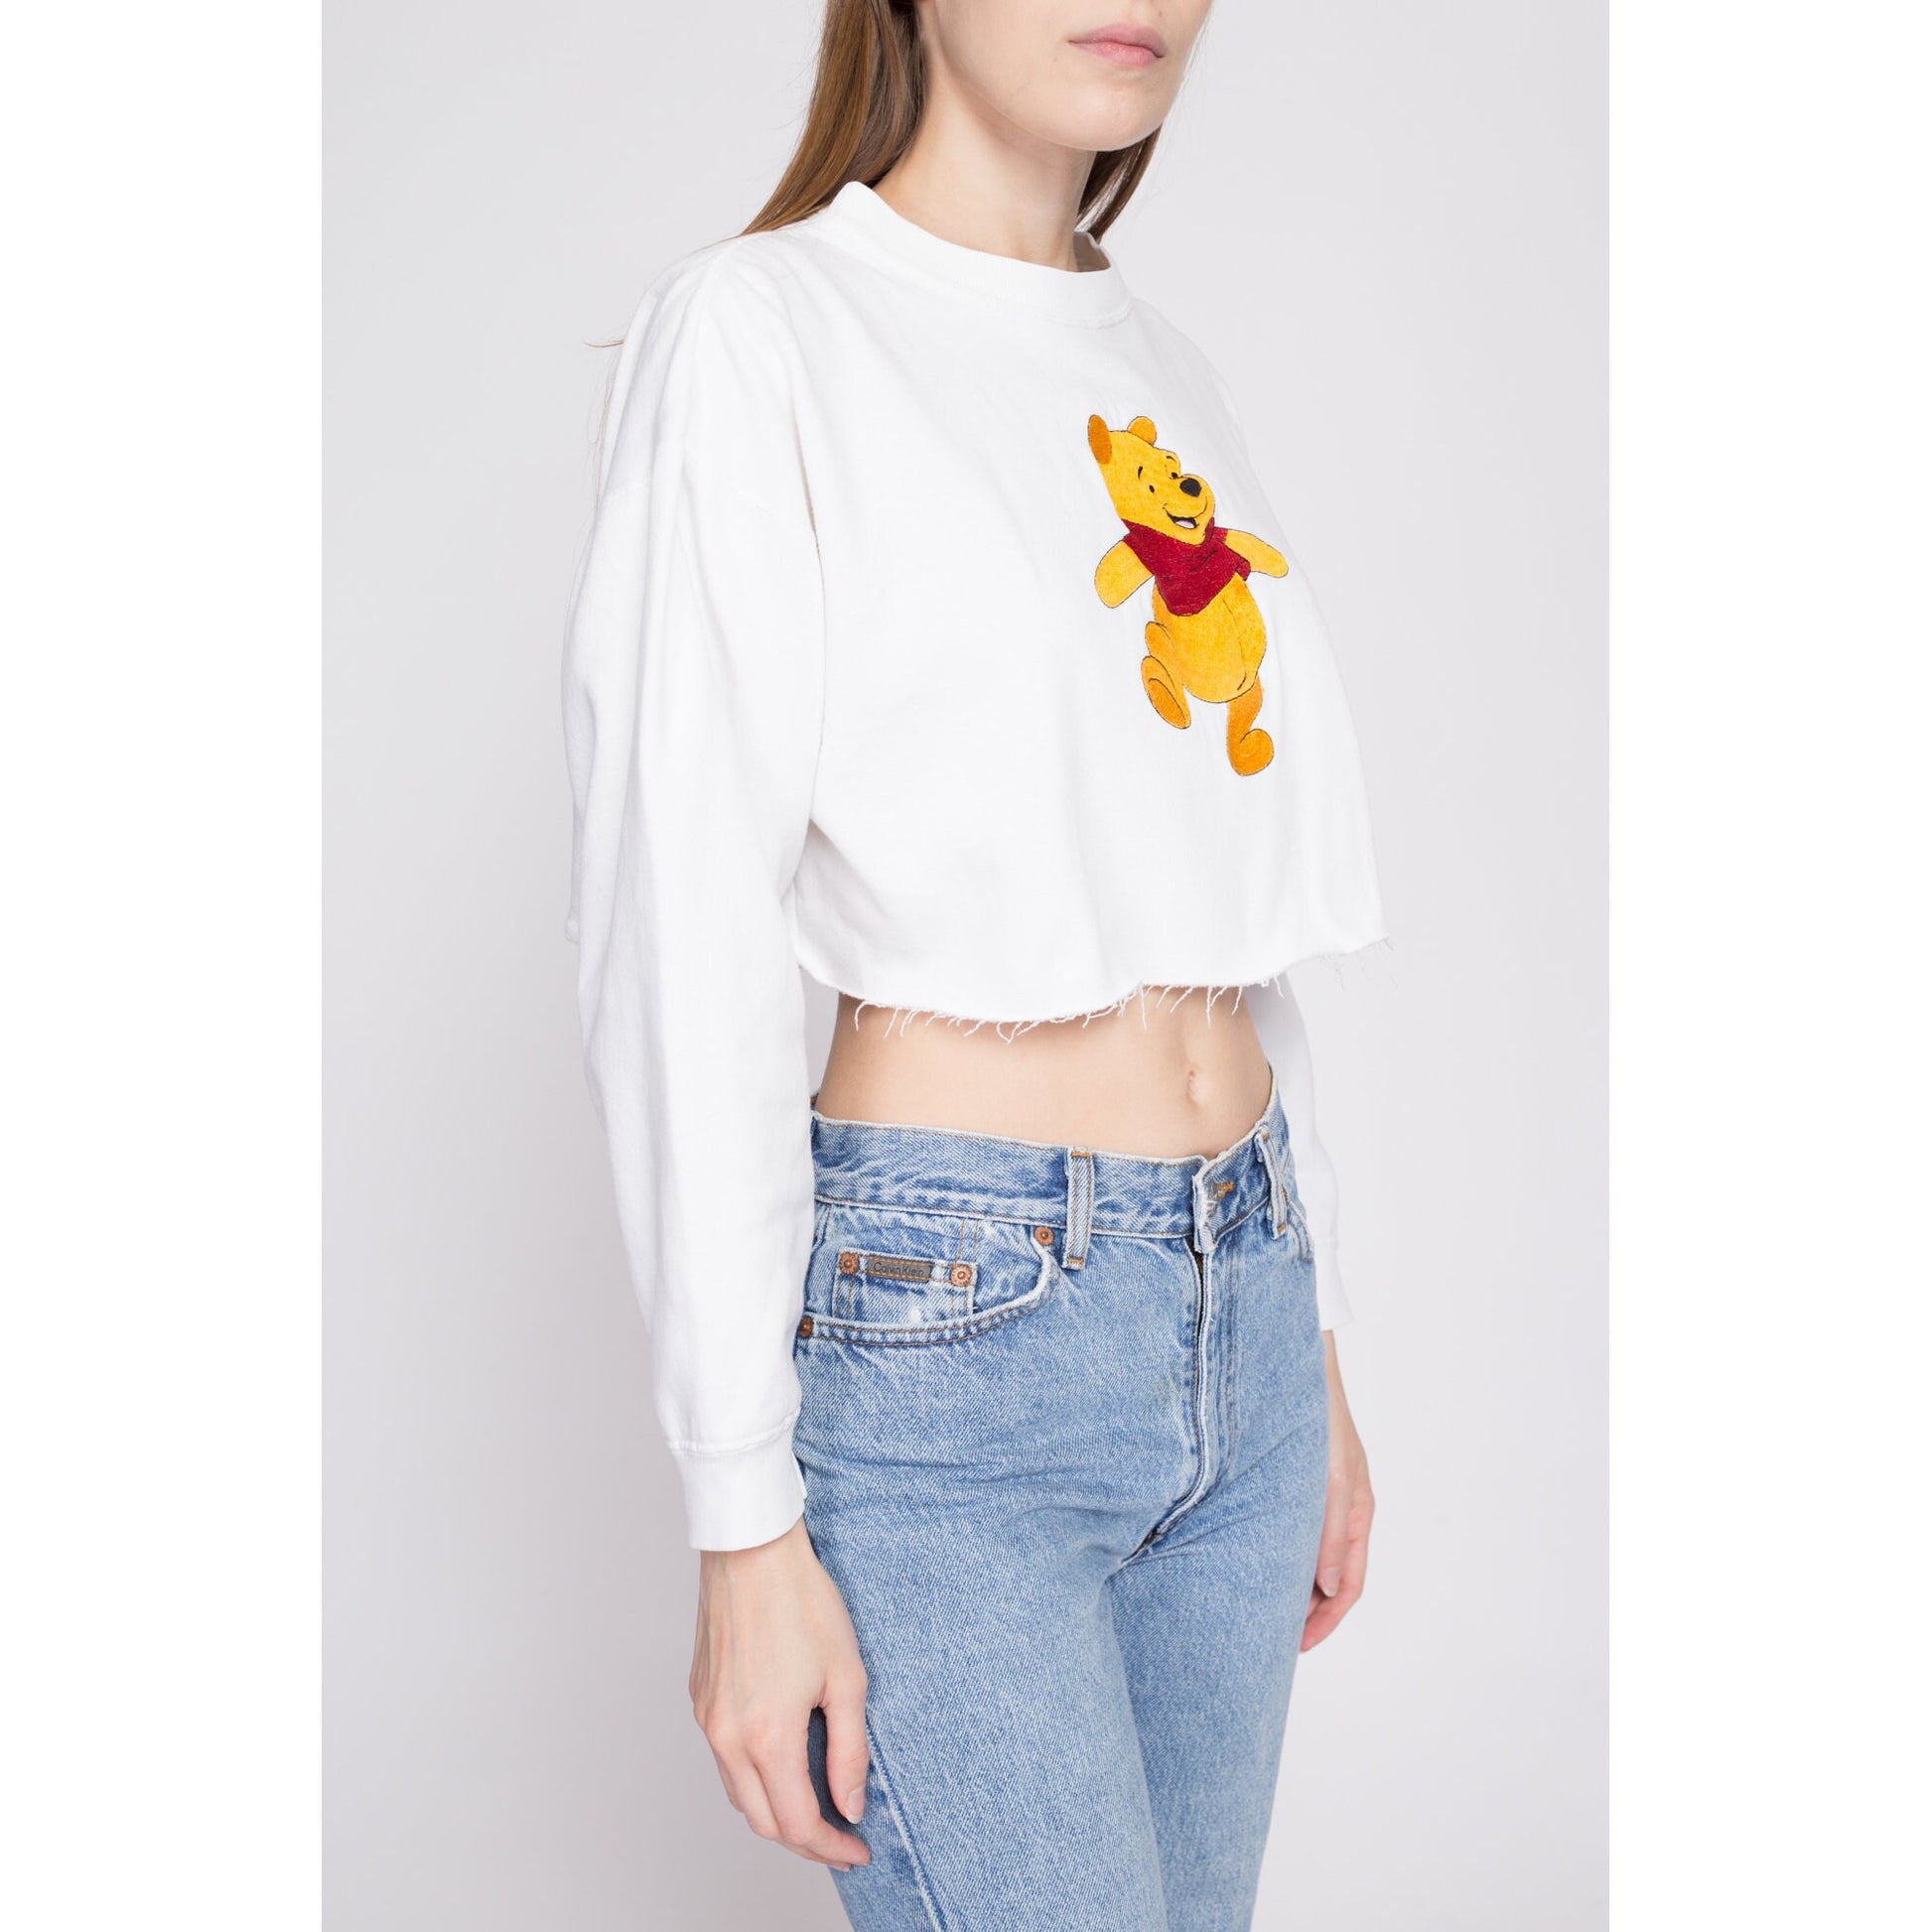 90s Winnie The Pooh Crop Top Sweatshirt - Extra Large | Vintage White Disney Cartoon Graphic Cropped Cut Off Crewneck